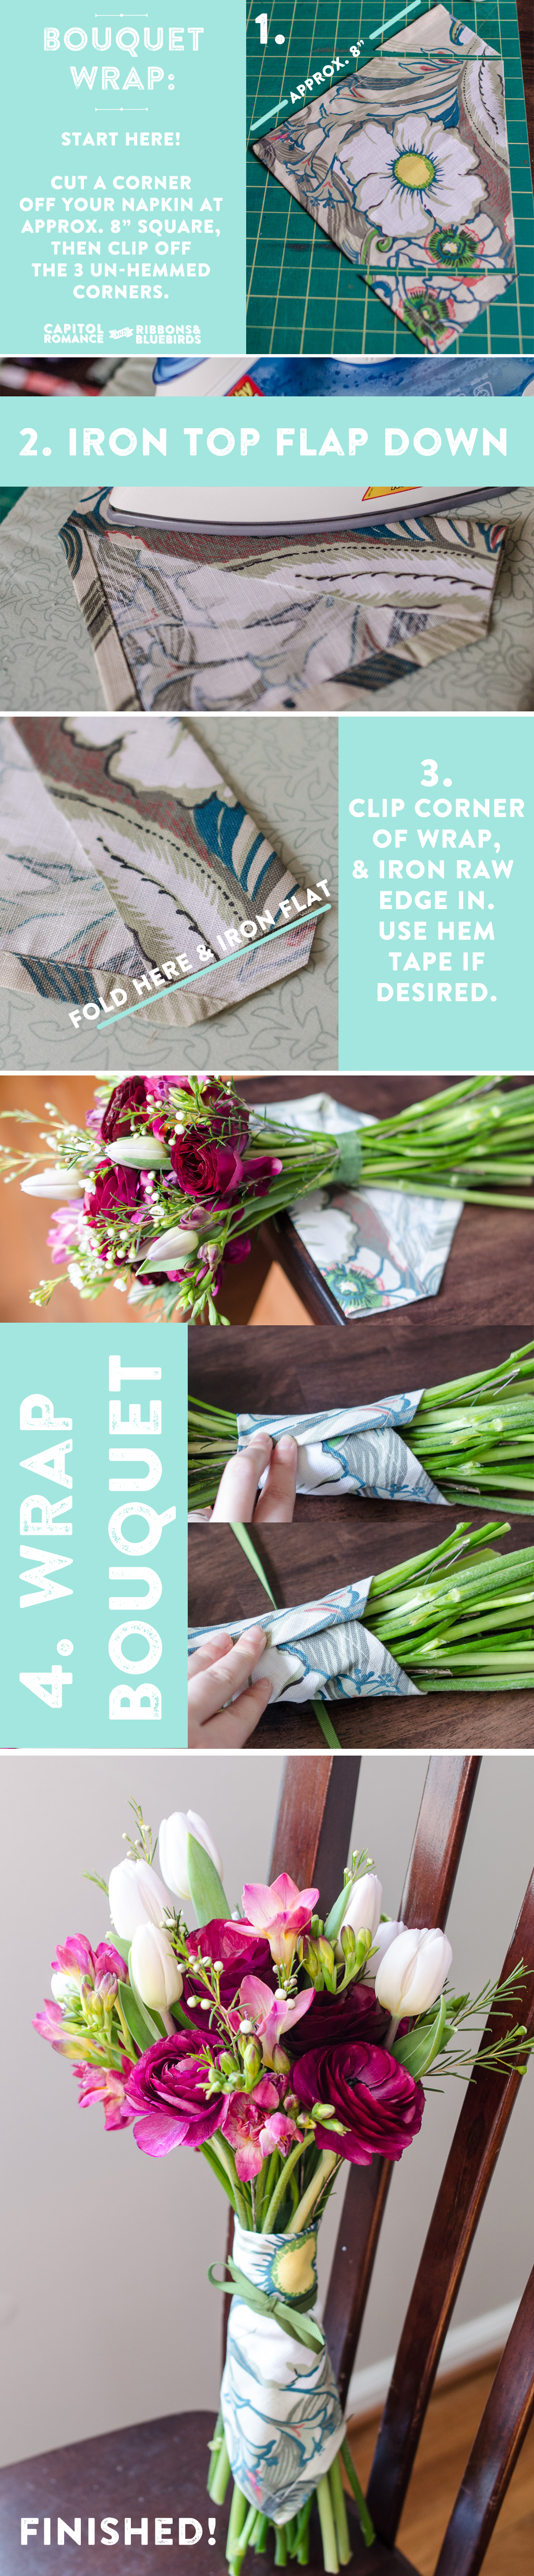 napkin_diy_bouquet wrap